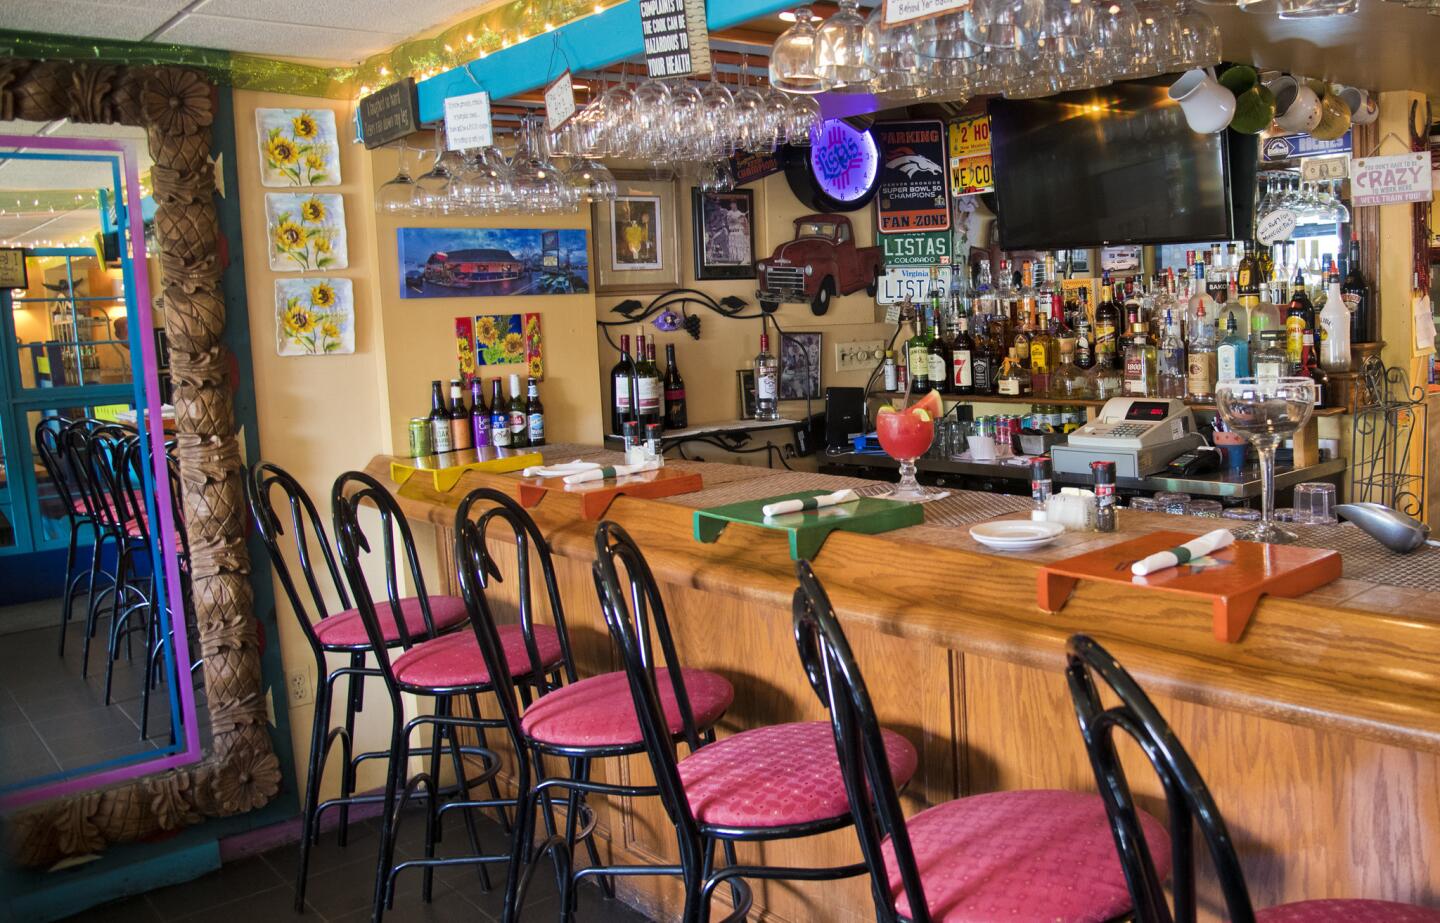 Customers can sit at a bar at Lista's Grill in Pasadena.